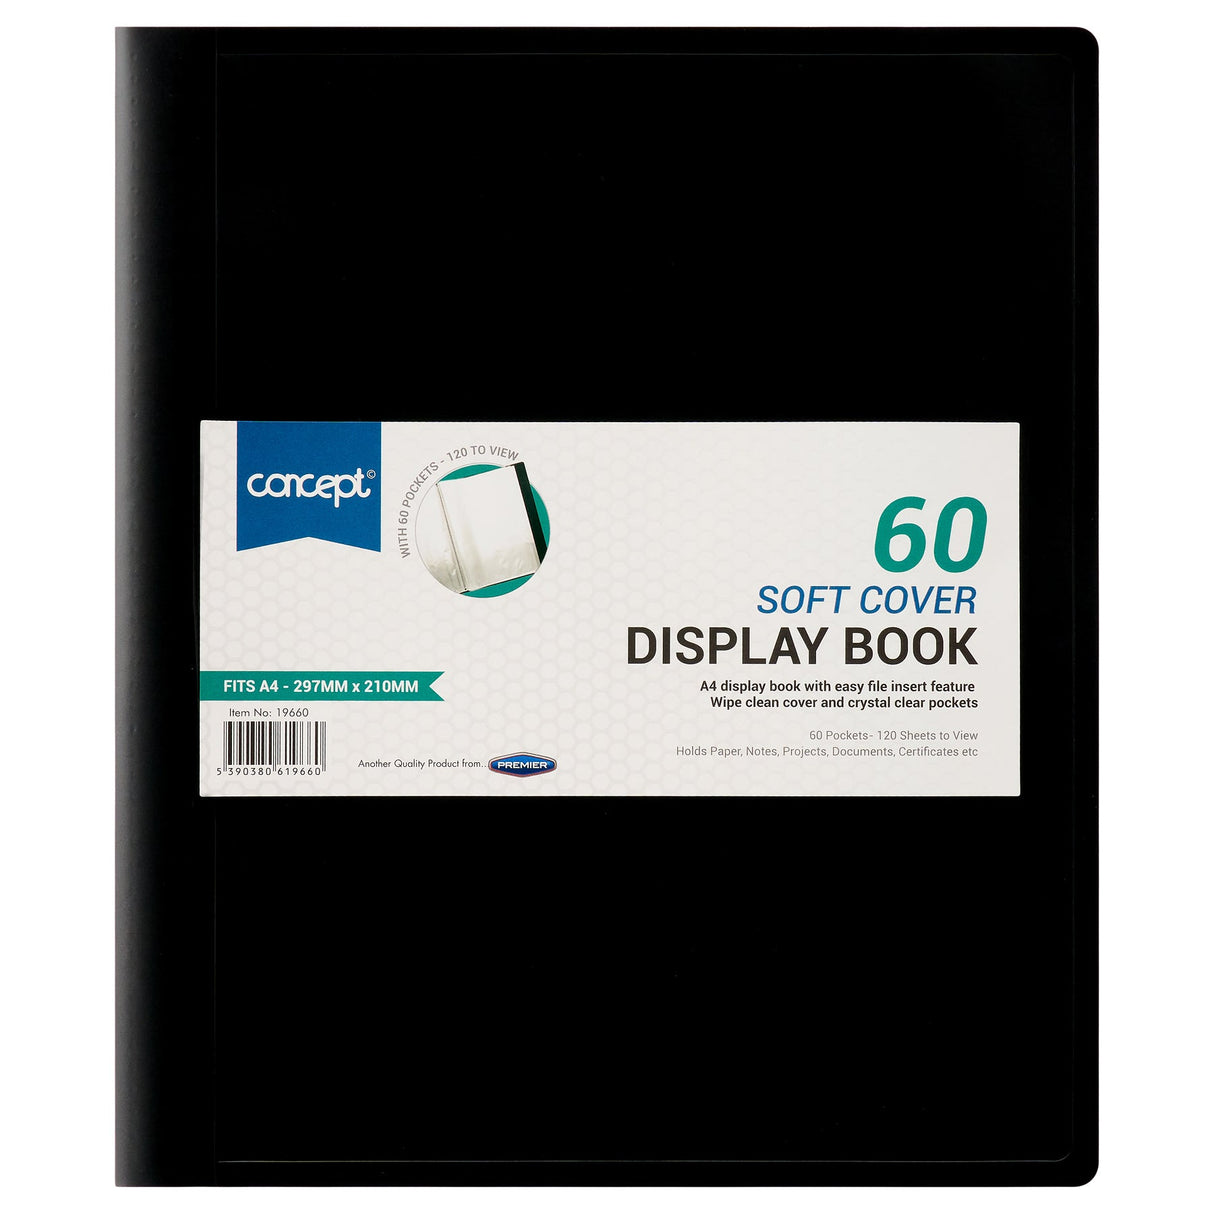 Concept A4 Display Book - Black Soft Cover. - 60 Pockets-Display Books-Concept|StationeryShop.co.uk